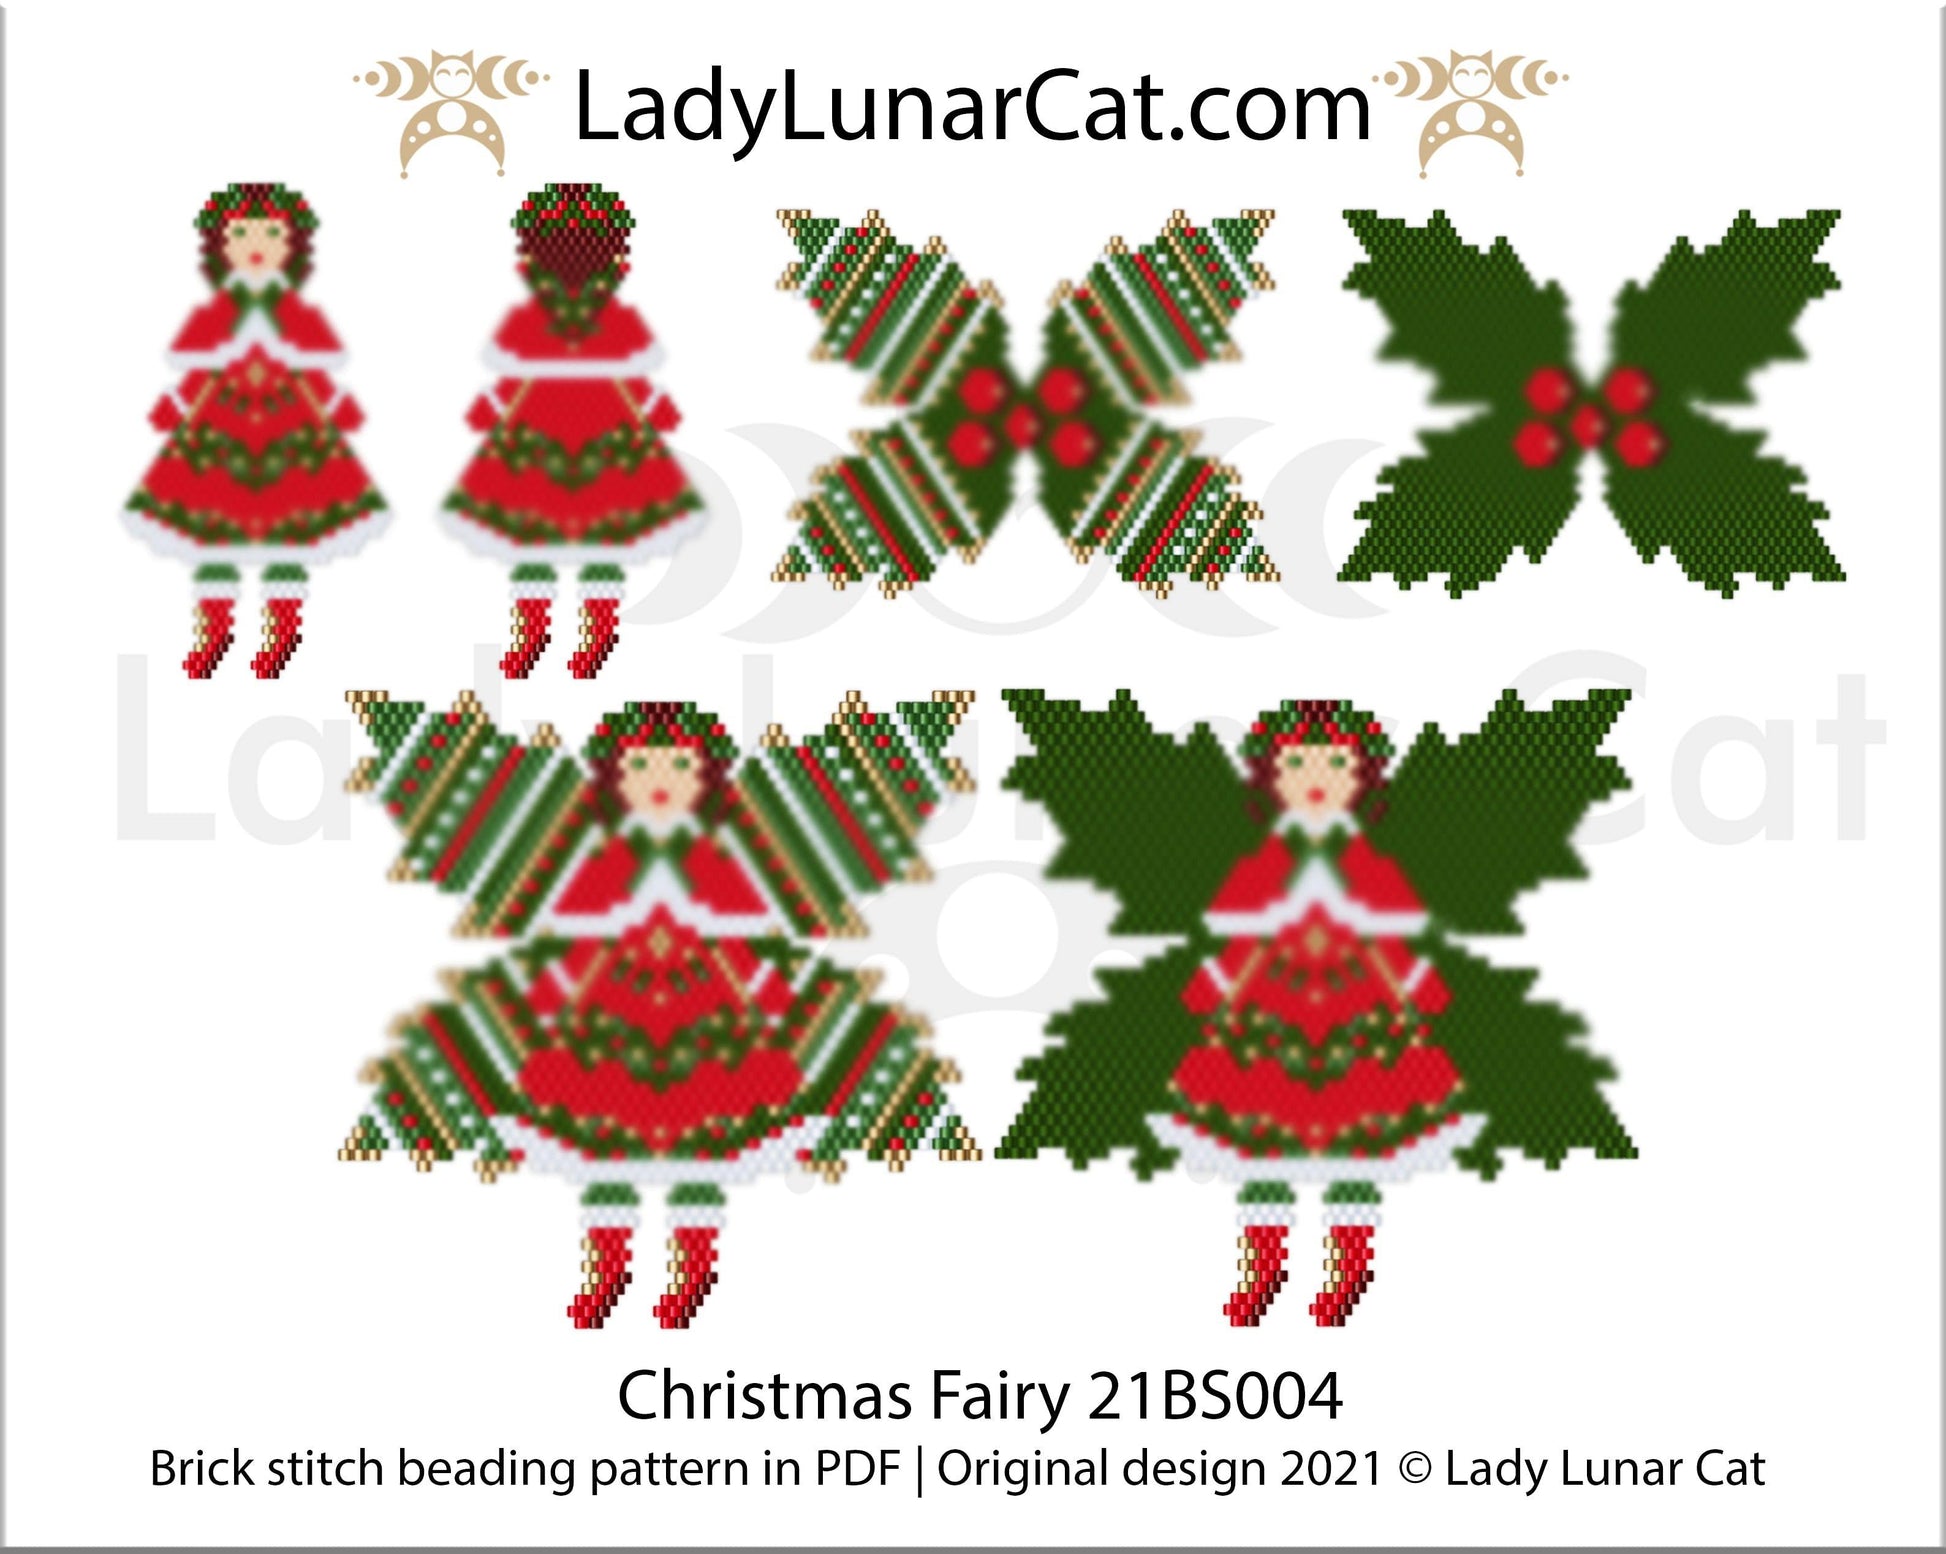 Brick stitch pattern for beading Christmas Fairy 21BS004 LadyLunarCat